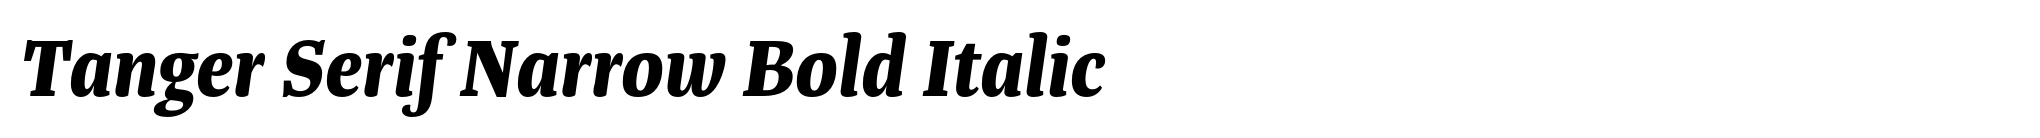 Tanger Serif Narrow Bold Italic image